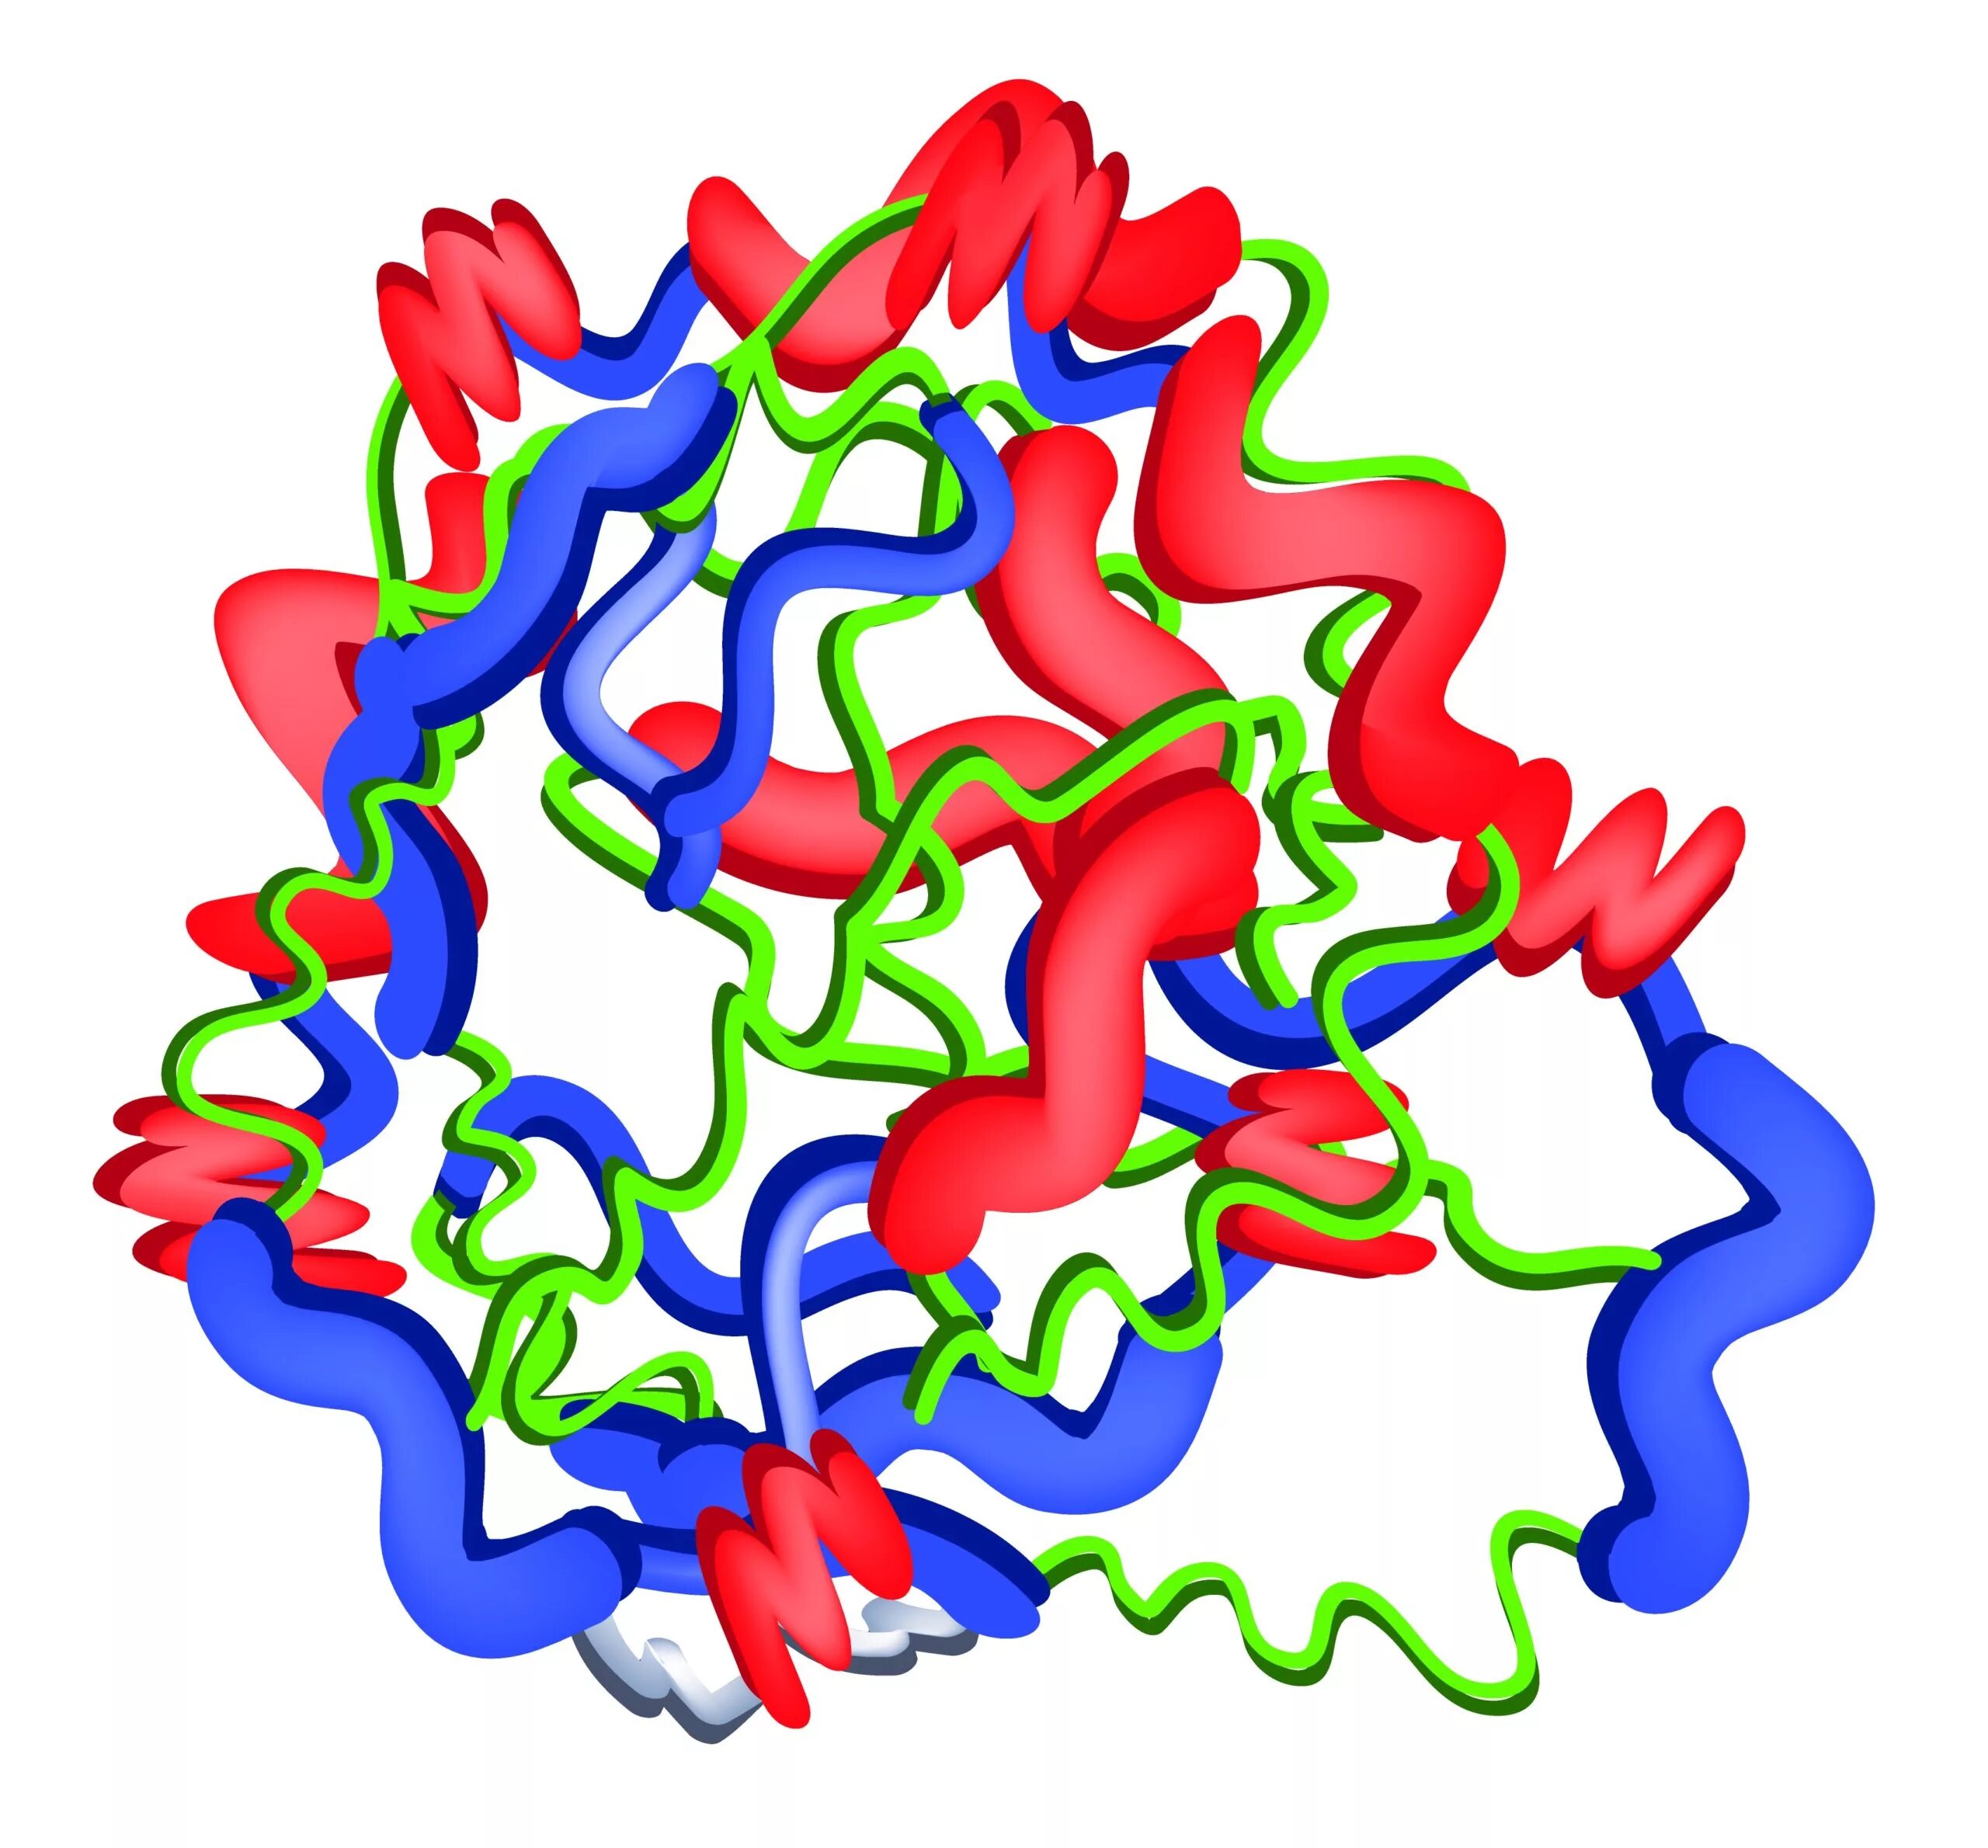 Пепсин фермент. Пепсин структура белка. Пепсин 3b. Фермент пепсин строение.